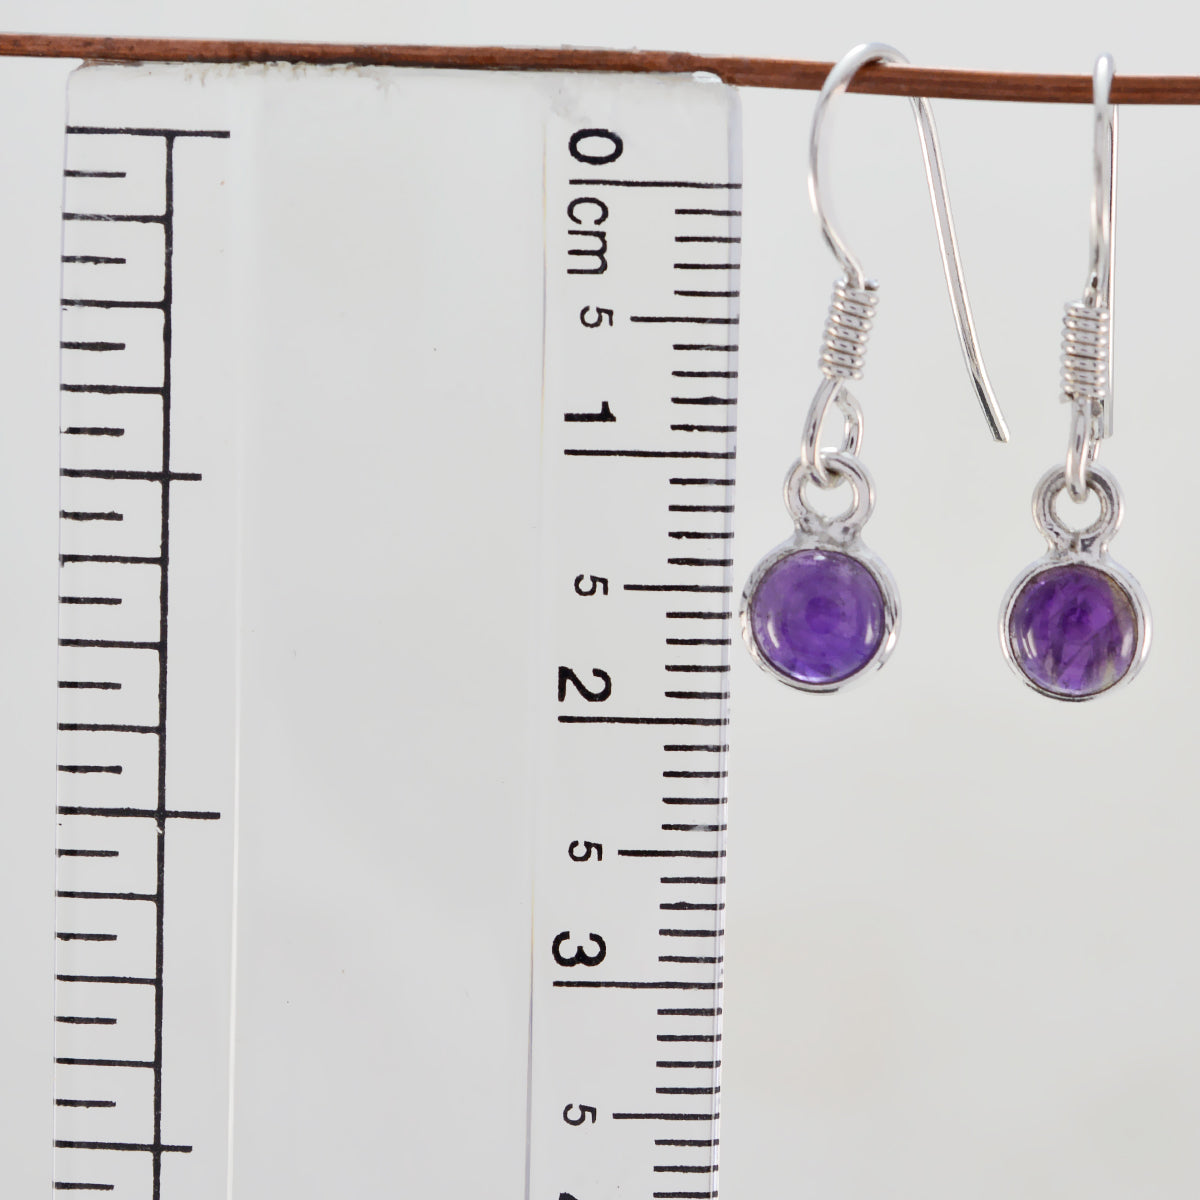 Riyo Real Gemstones round Cabochon Purple Amethyst Silver Earring gift for brithday